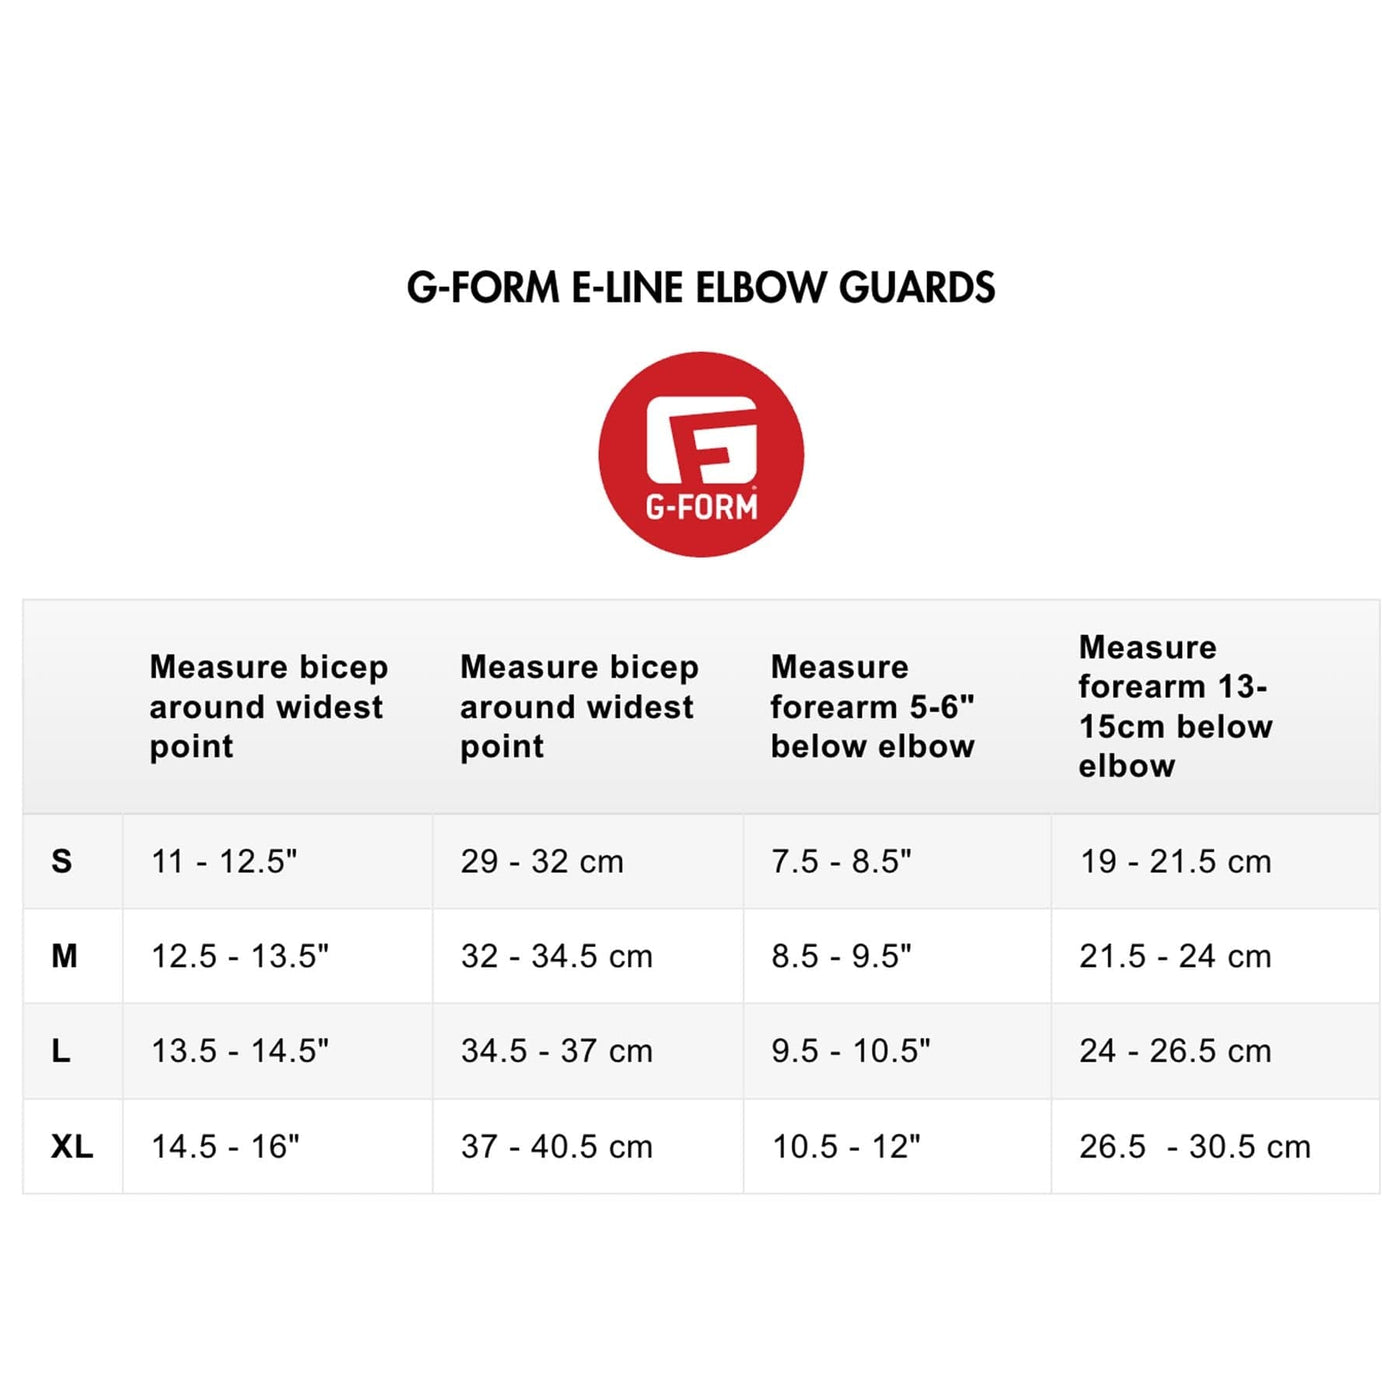 G-FORM E-LINE ELBOW GUARDS SIZE CHART